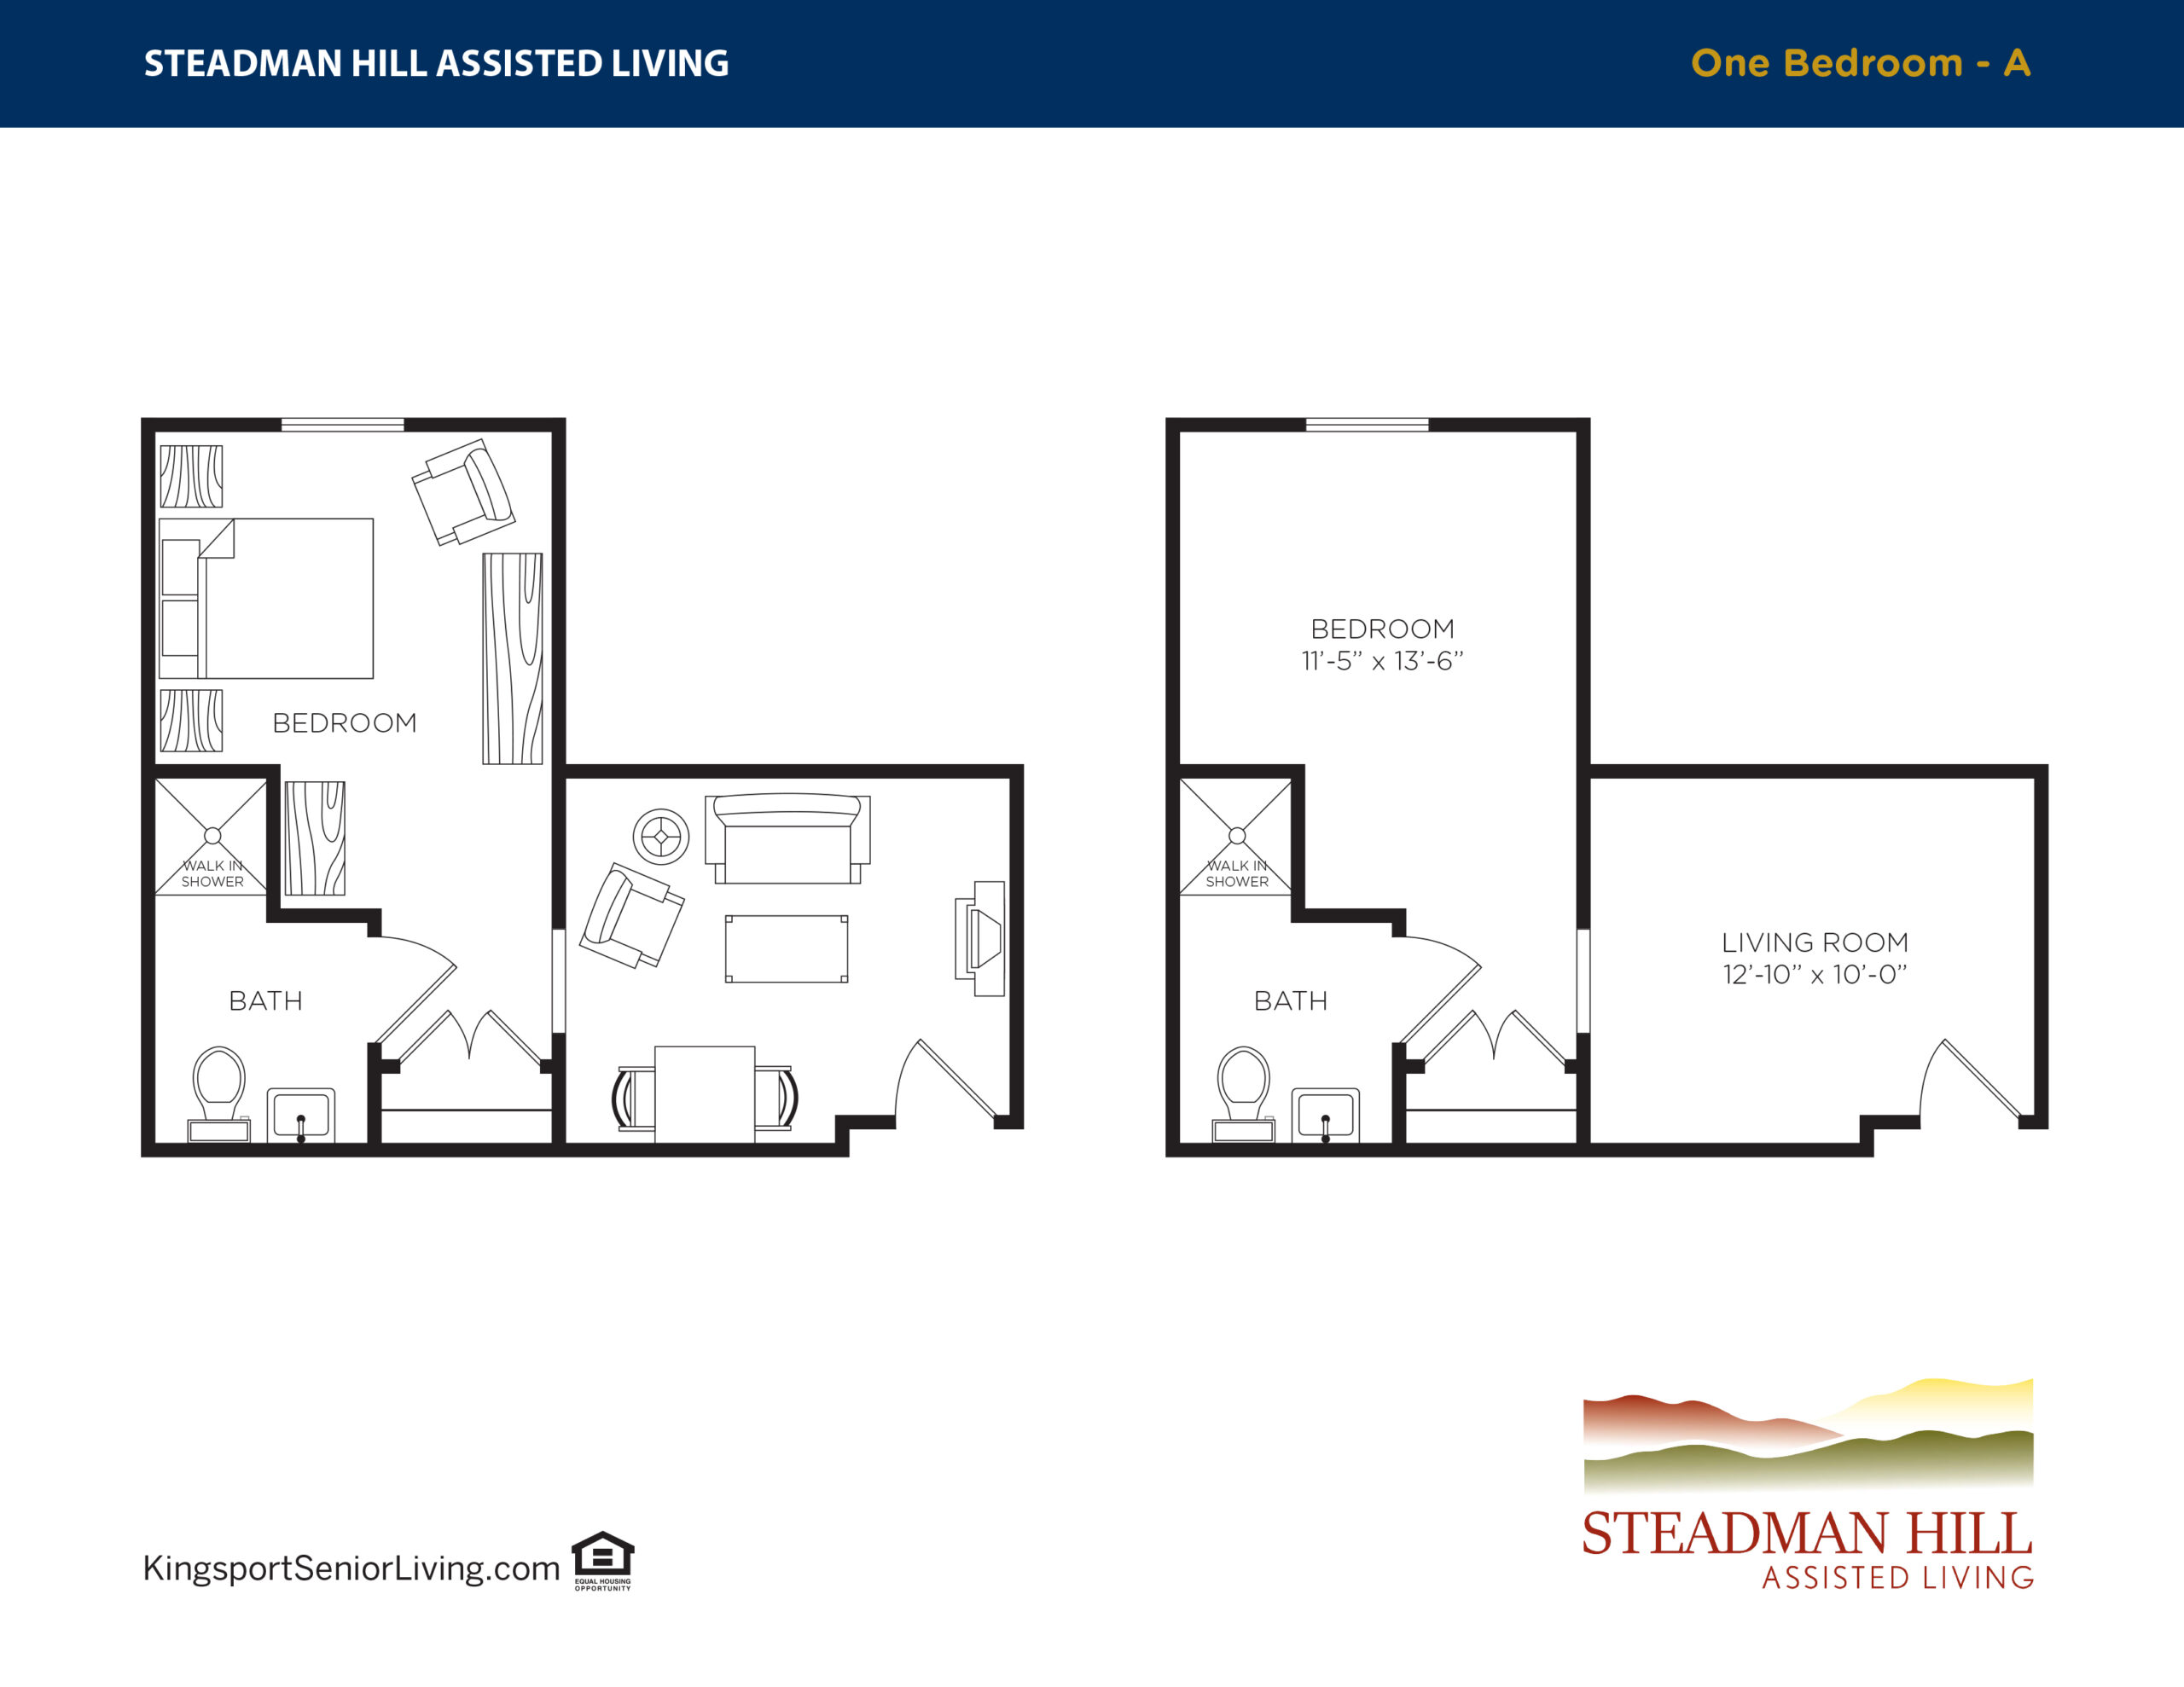 Steadman Hill Floorplan 1 Bedroom A